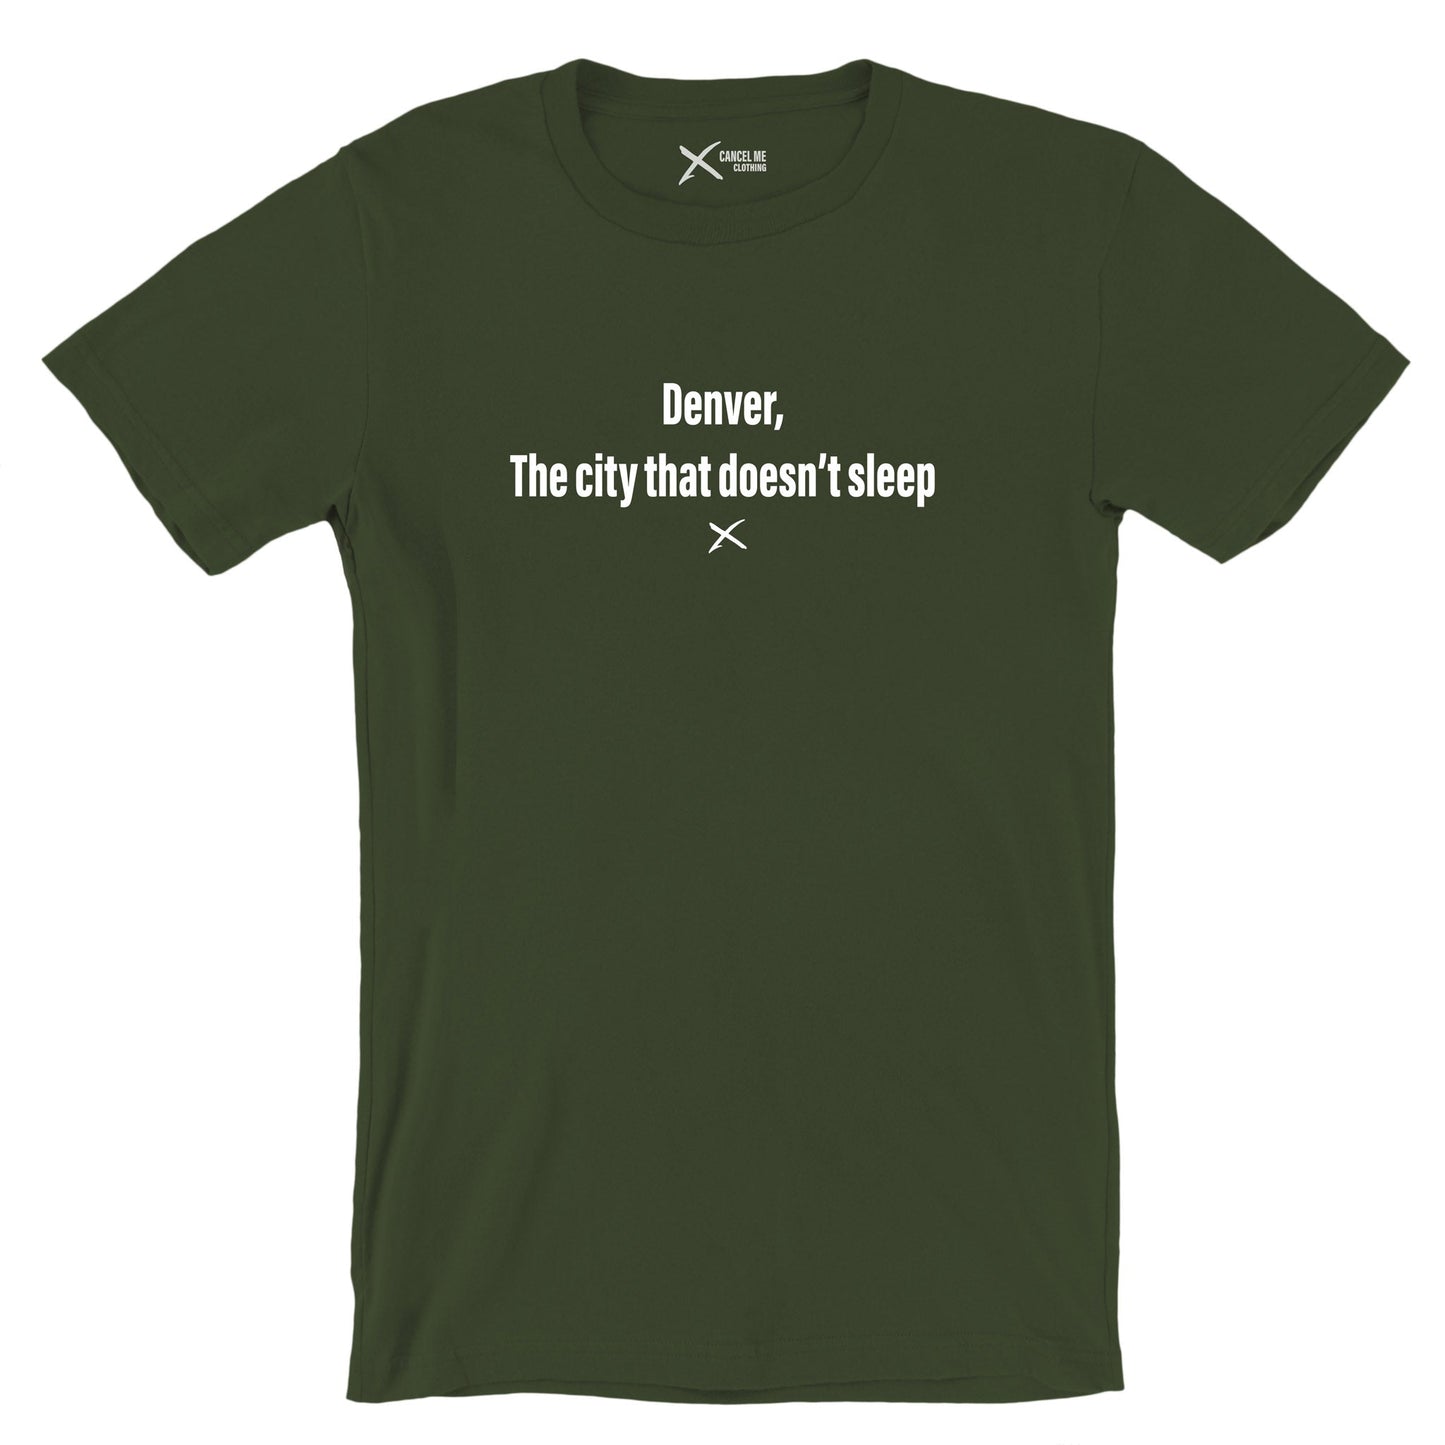 Denver, The city that doesn't sleep - Shirt